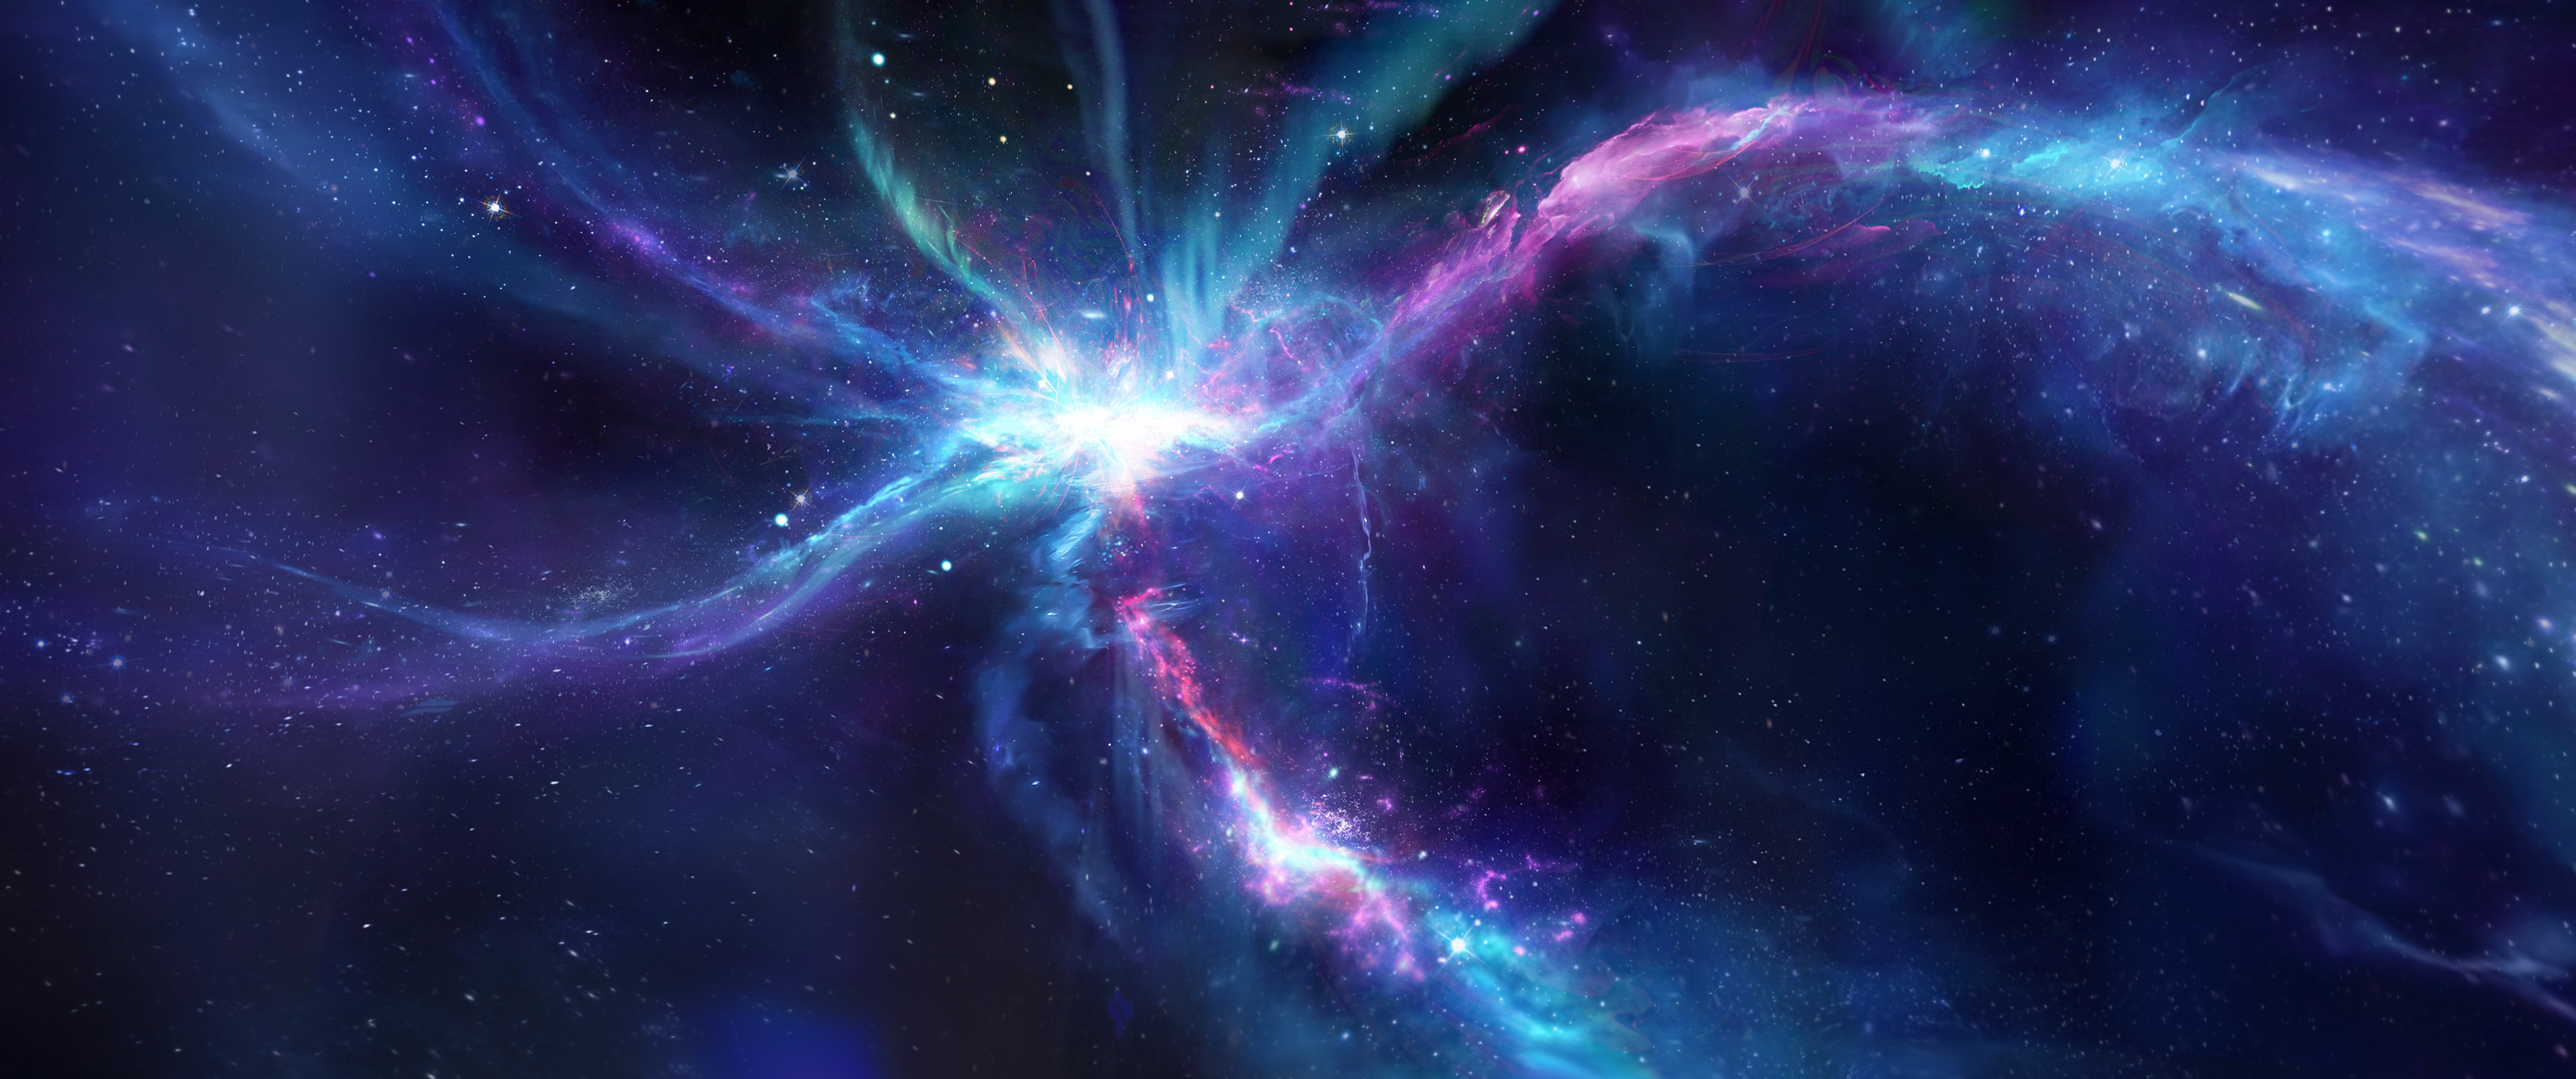 Rutger Van De Steeg Digital Art Artwork Illustration Event Horizon Space Space Art Nebula Blue Stars 3840x1609